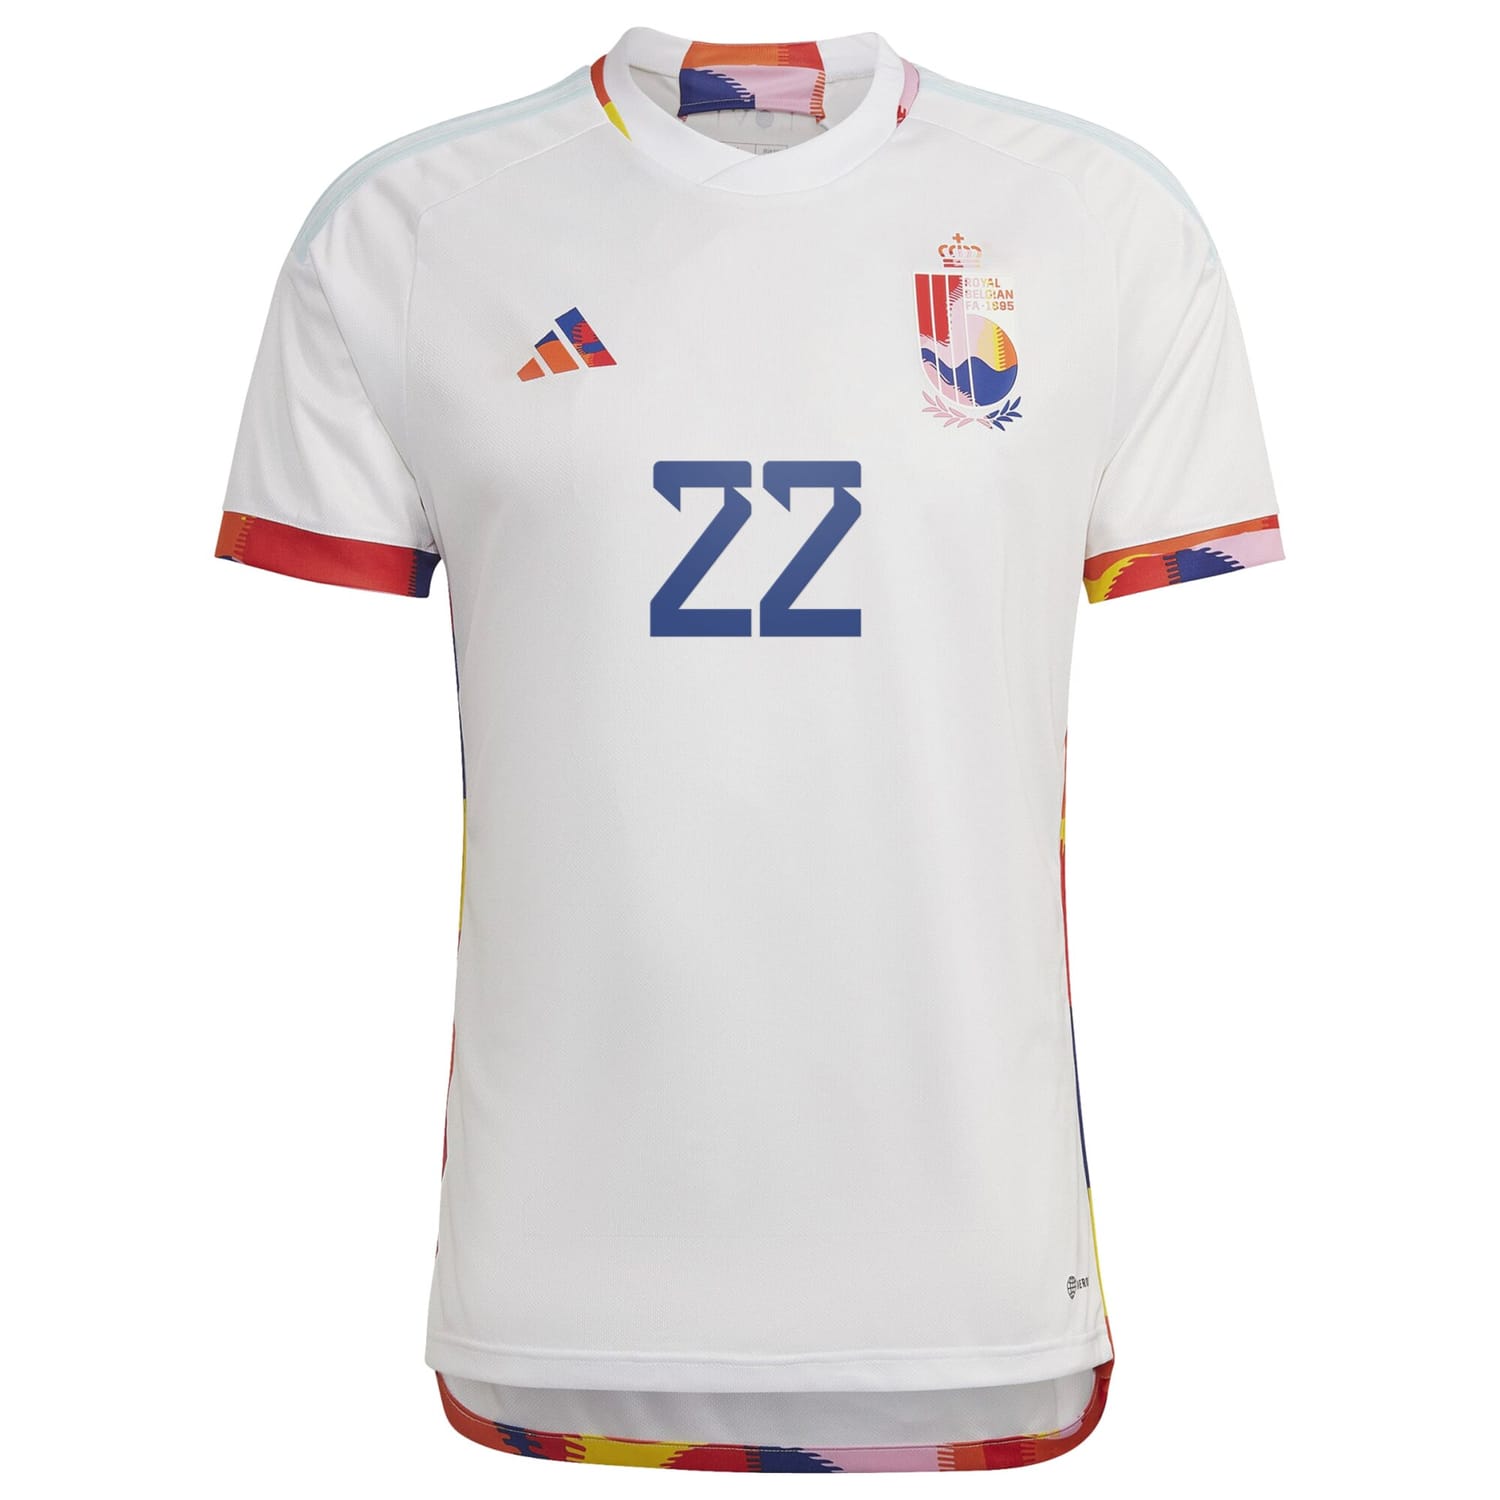 Belgium National Team Away Jersey Shirt 2022 player Charles De Ketelaere 22 printing for Men